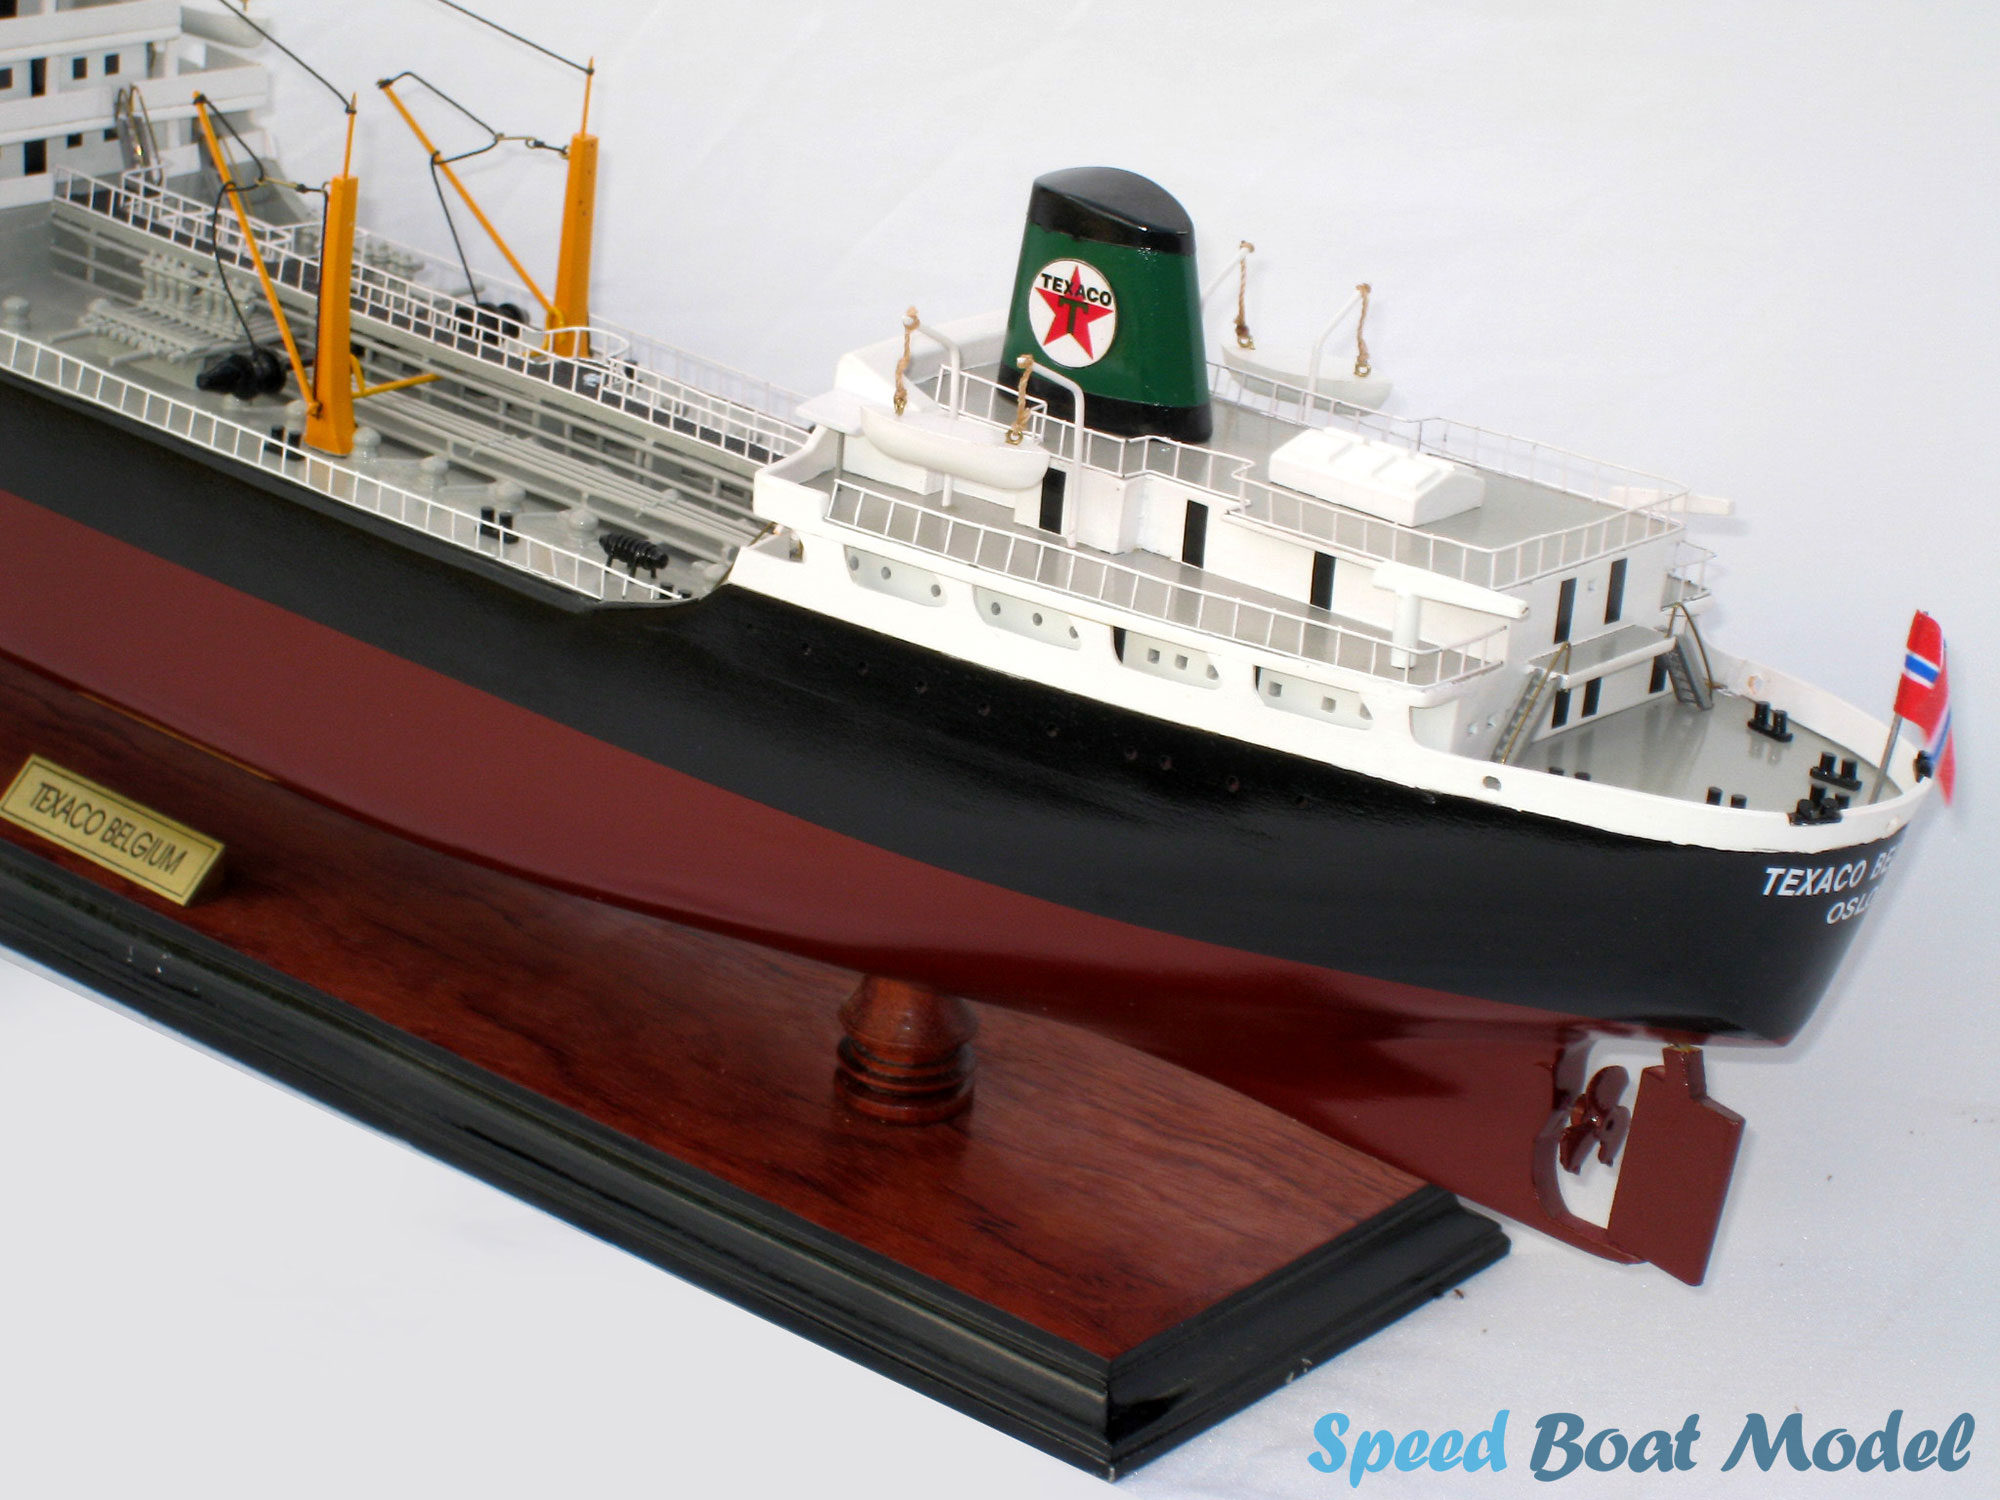 Texaco Belgium Commercial Ship Model 31.5"